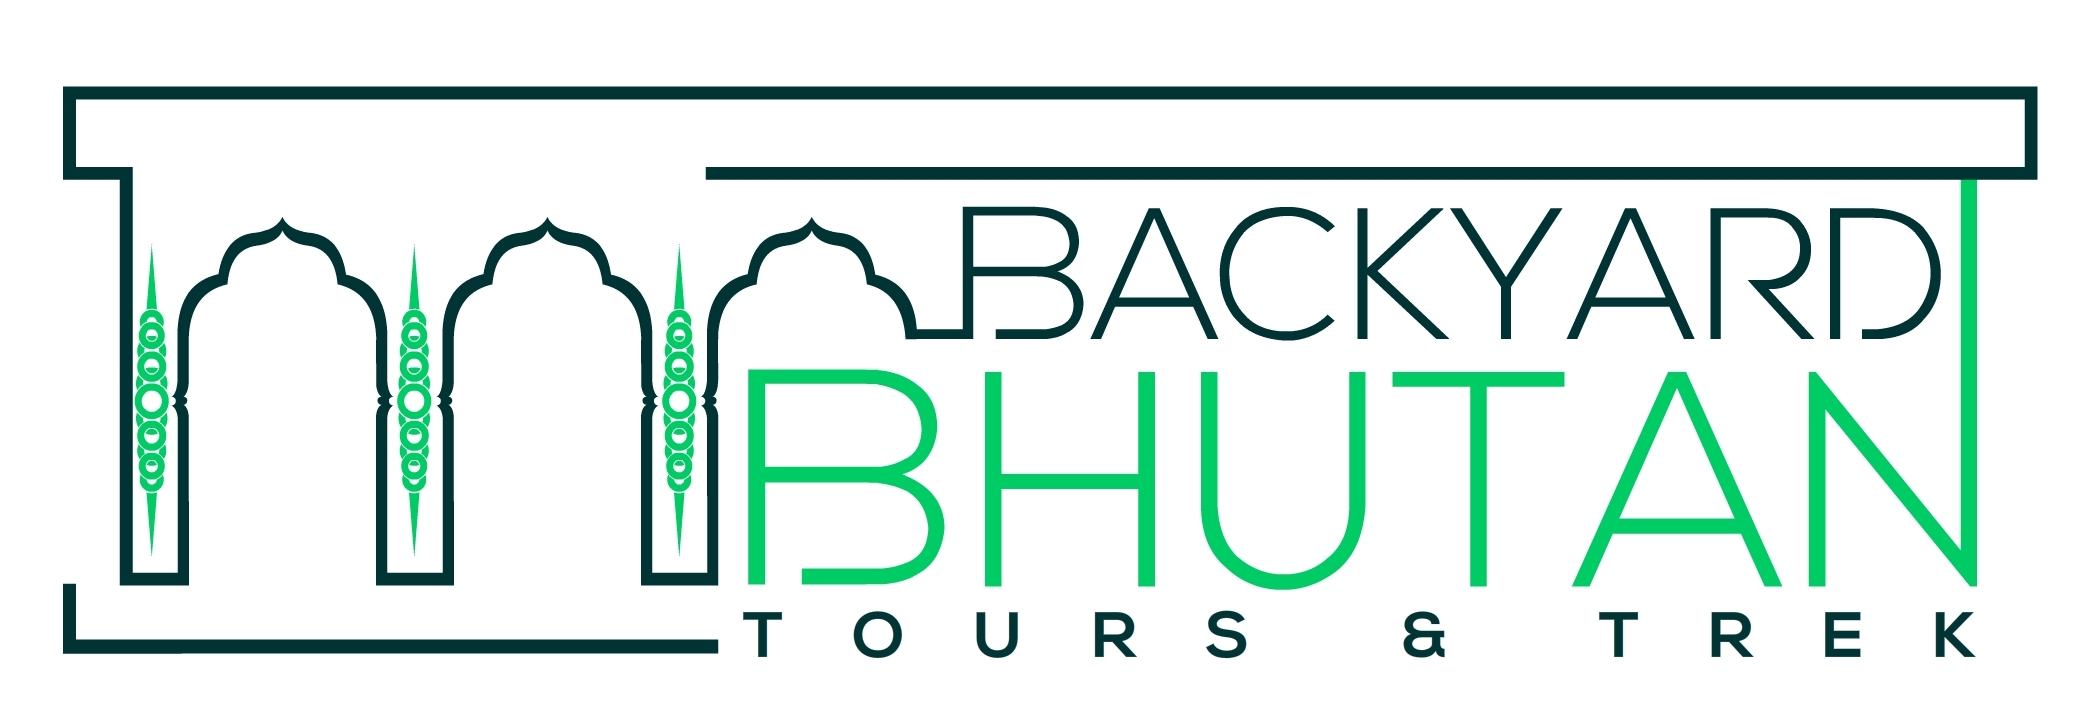 Backyard Bhutan Tours and Trek